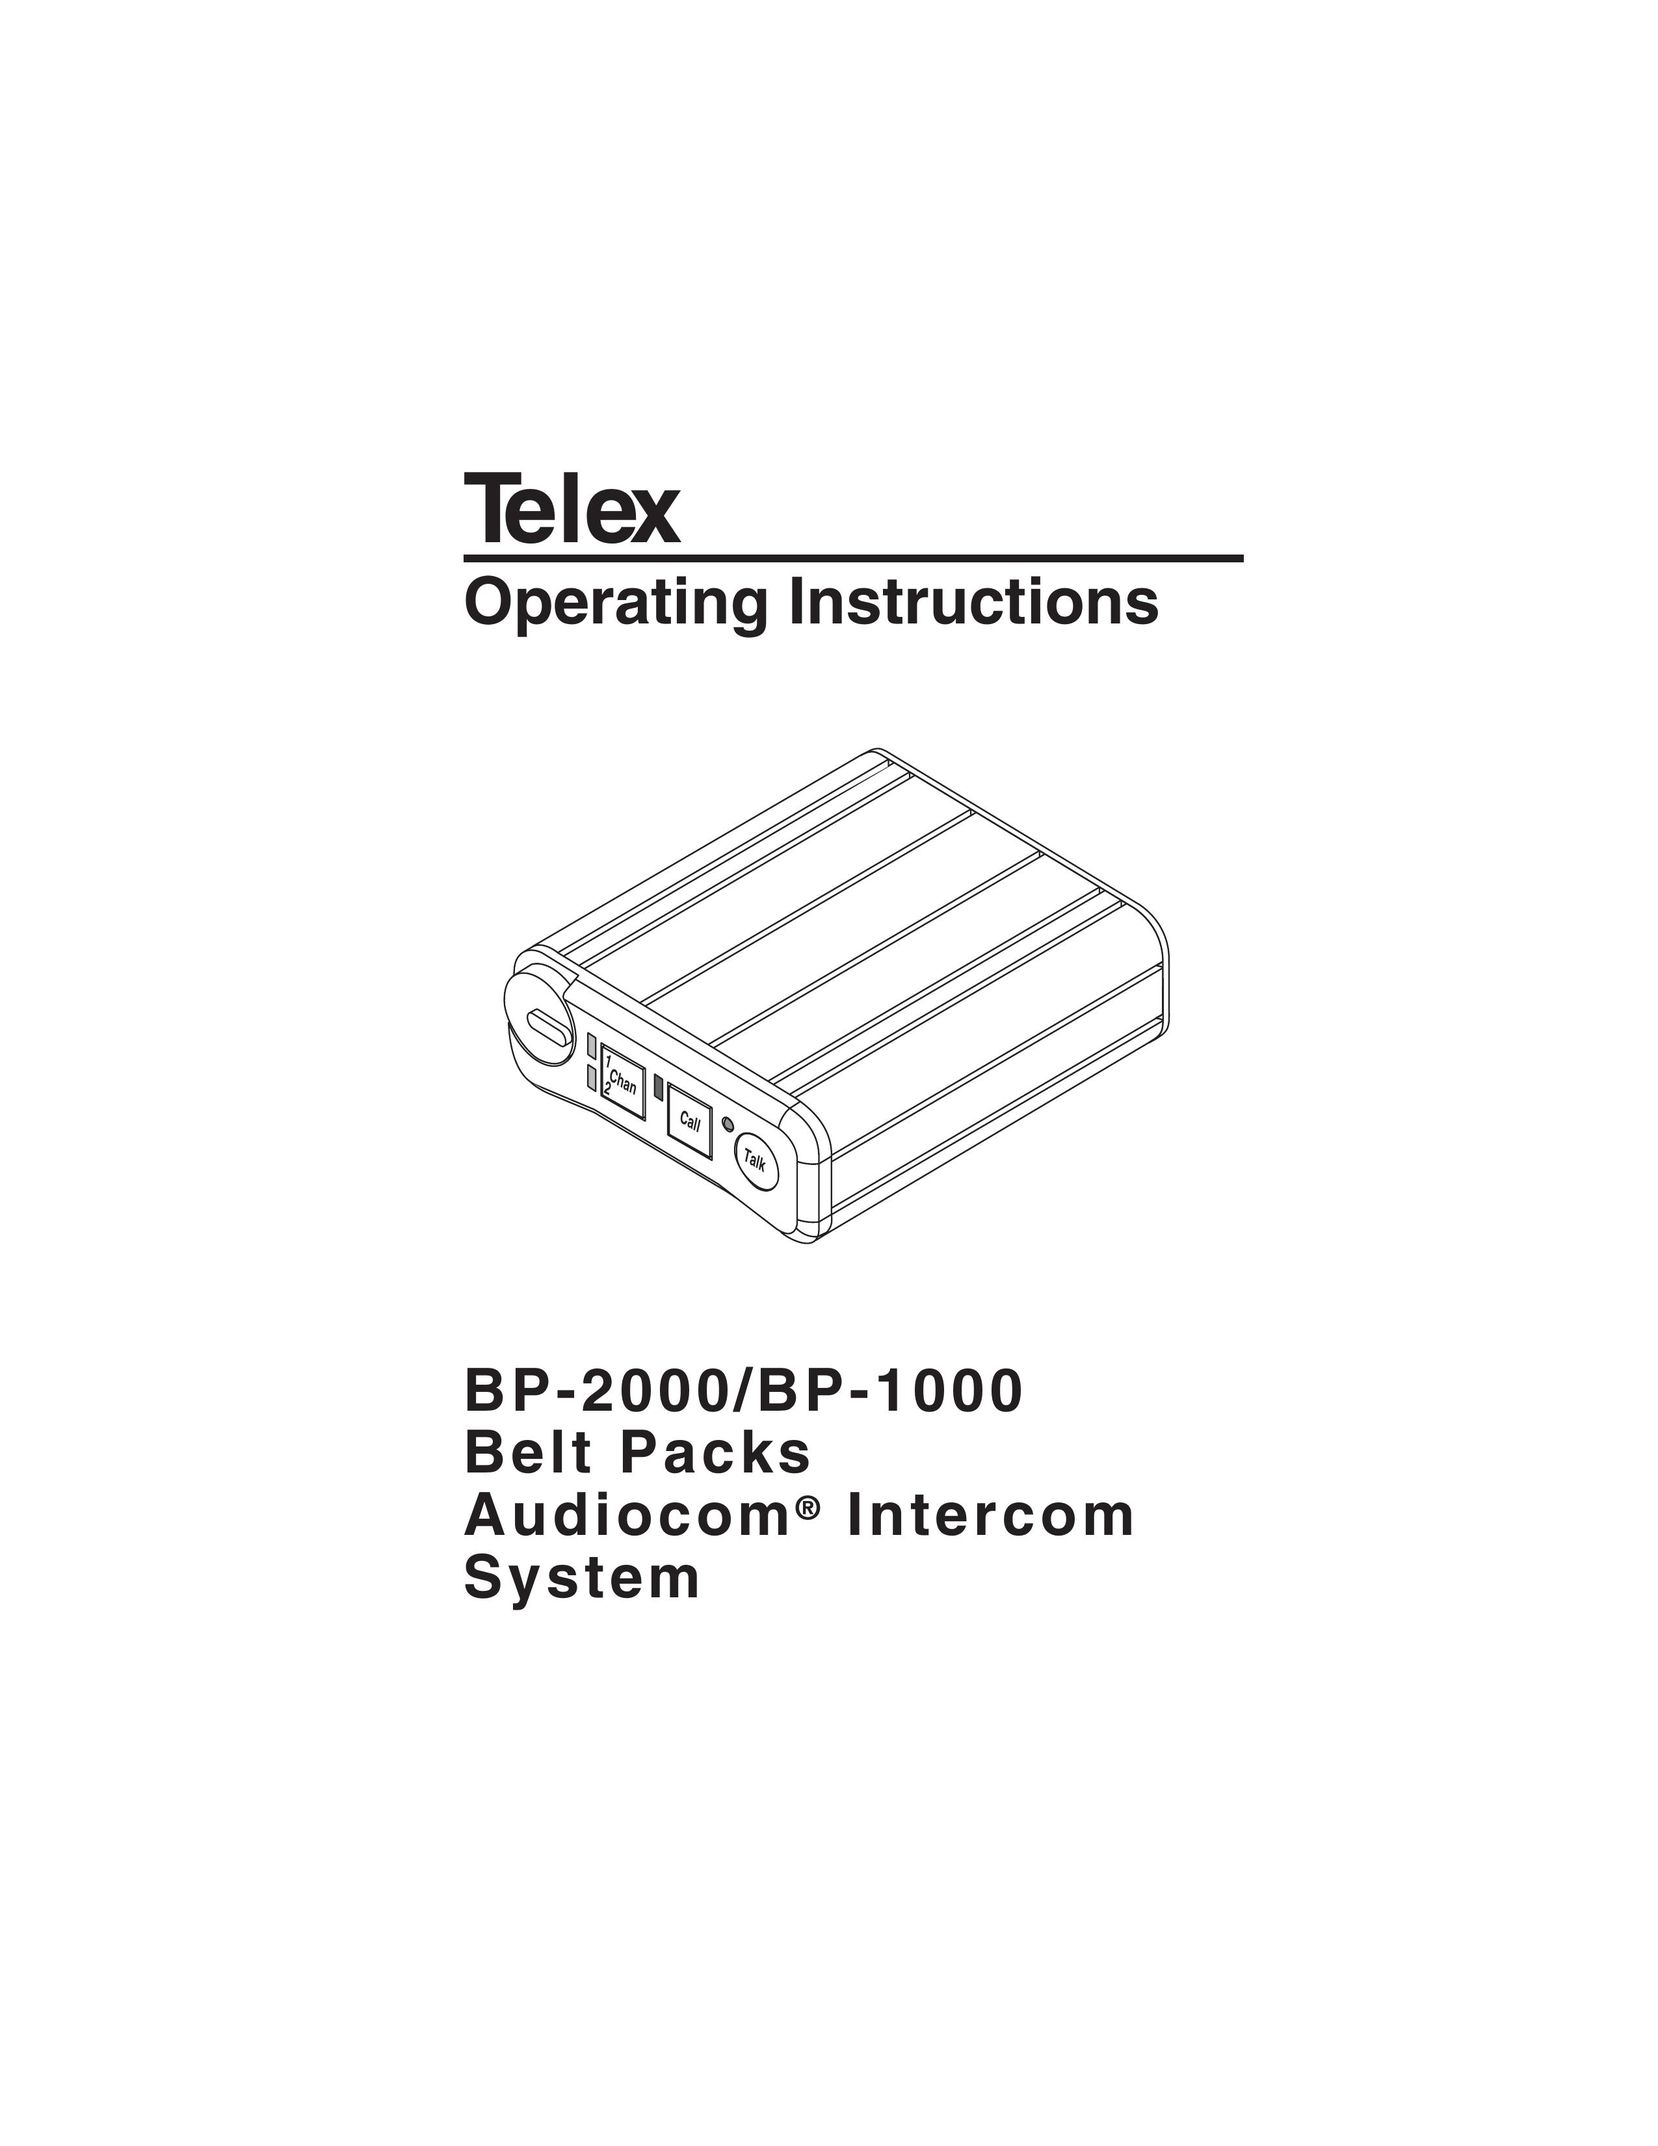 Telex BP-2000 Intercom System User Manual